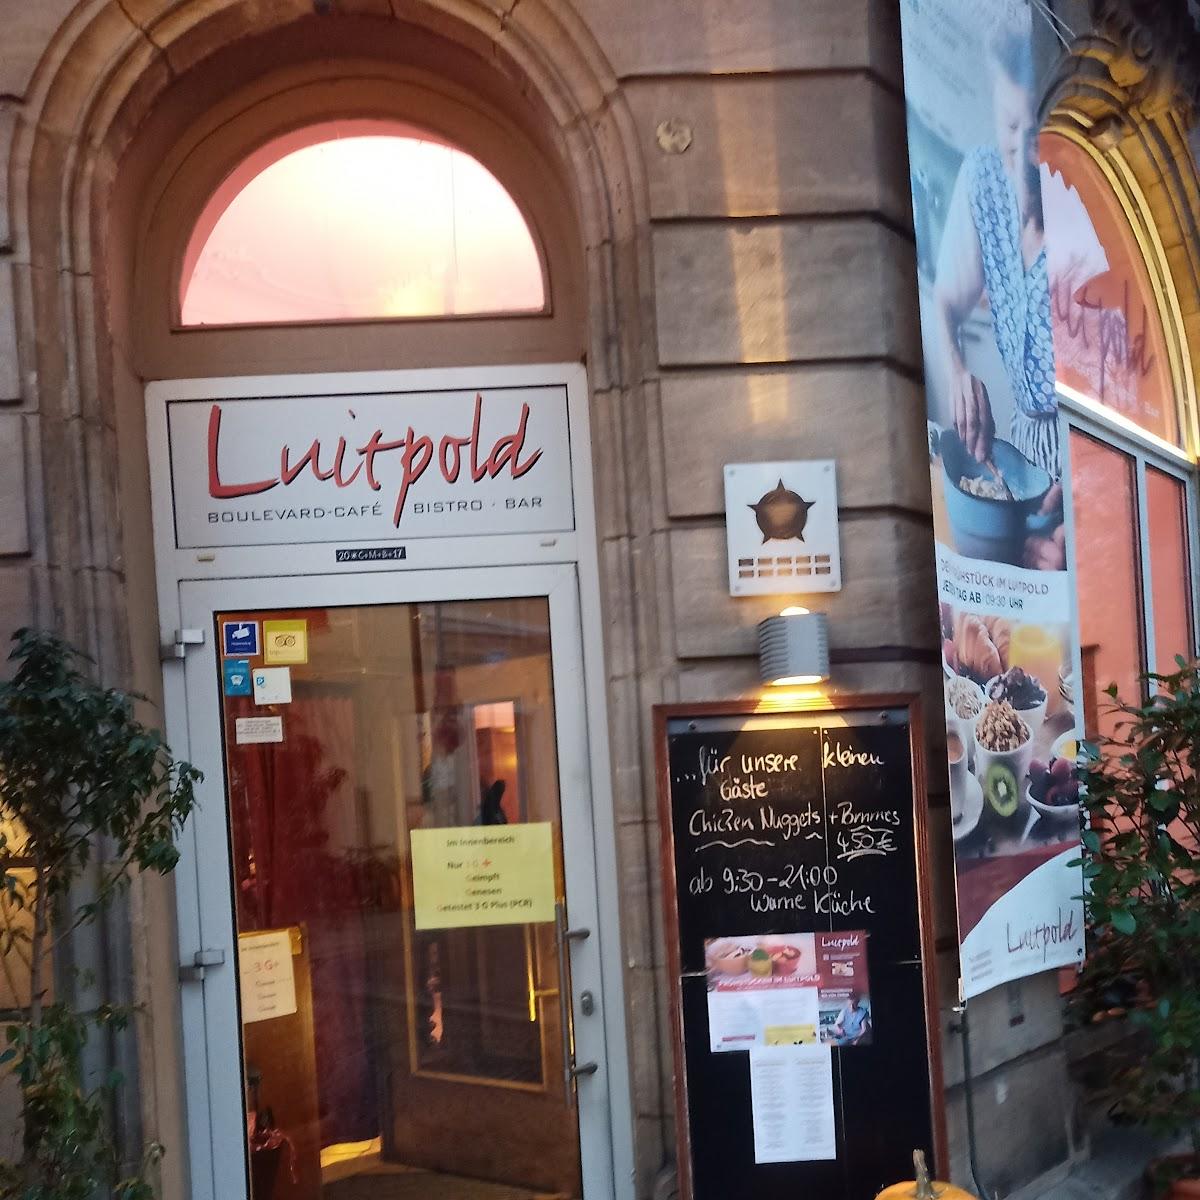 Restaurant "Boulevard Café Luitpold" in Bamberg